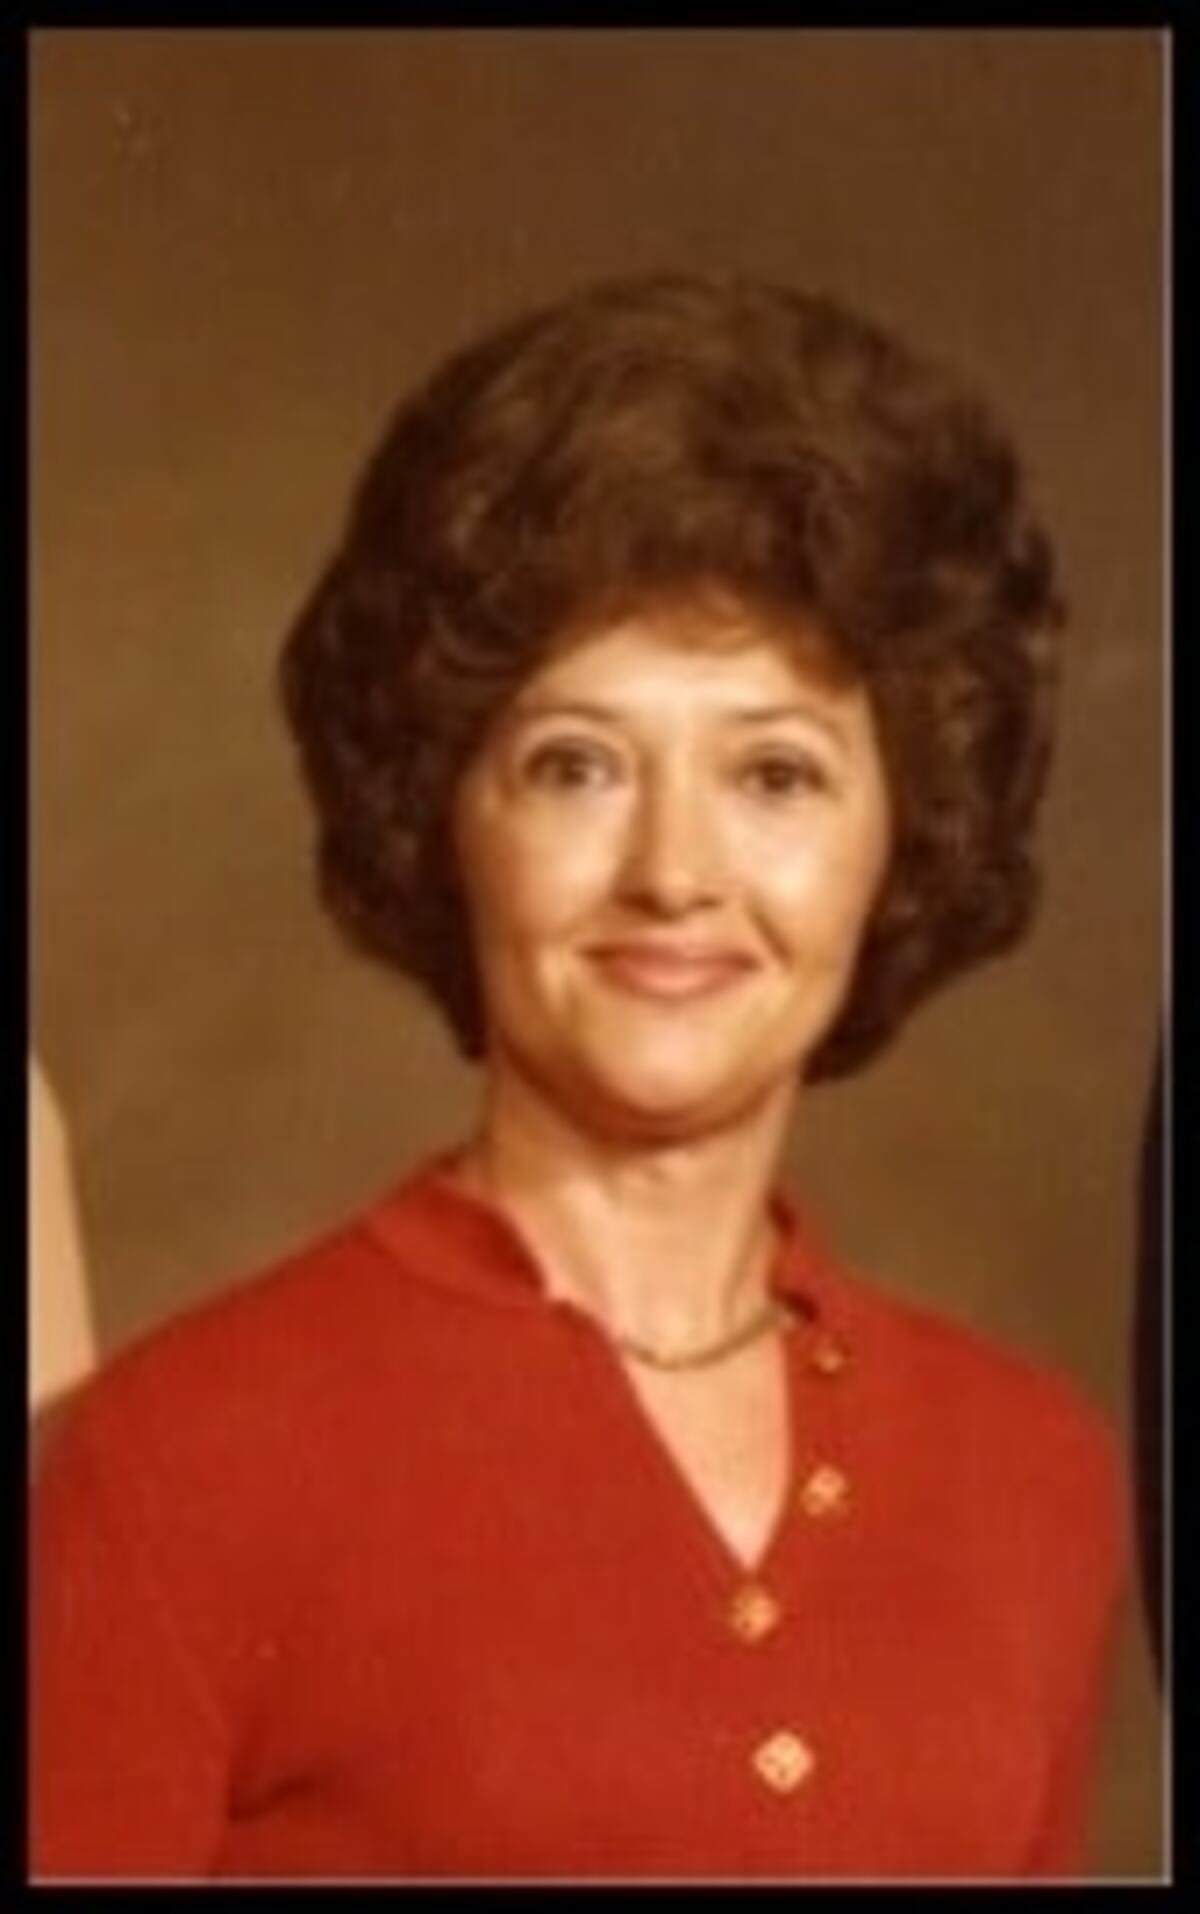 Bennett Family Murder: photo of homicide victim Patricia Smith